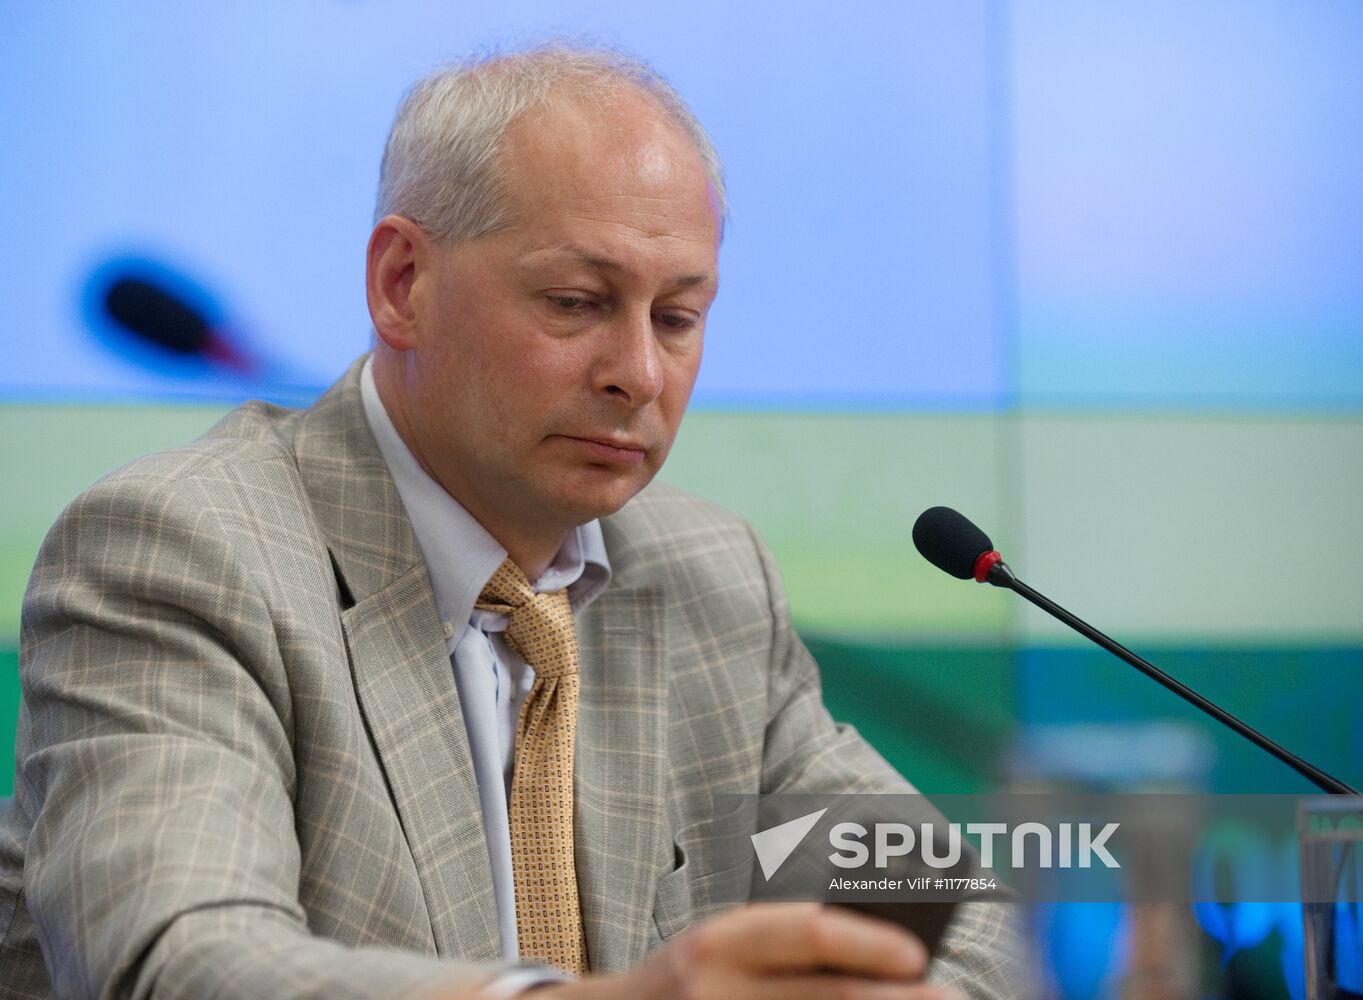 Communications Minister Nikolai Nikiforov gives news conference